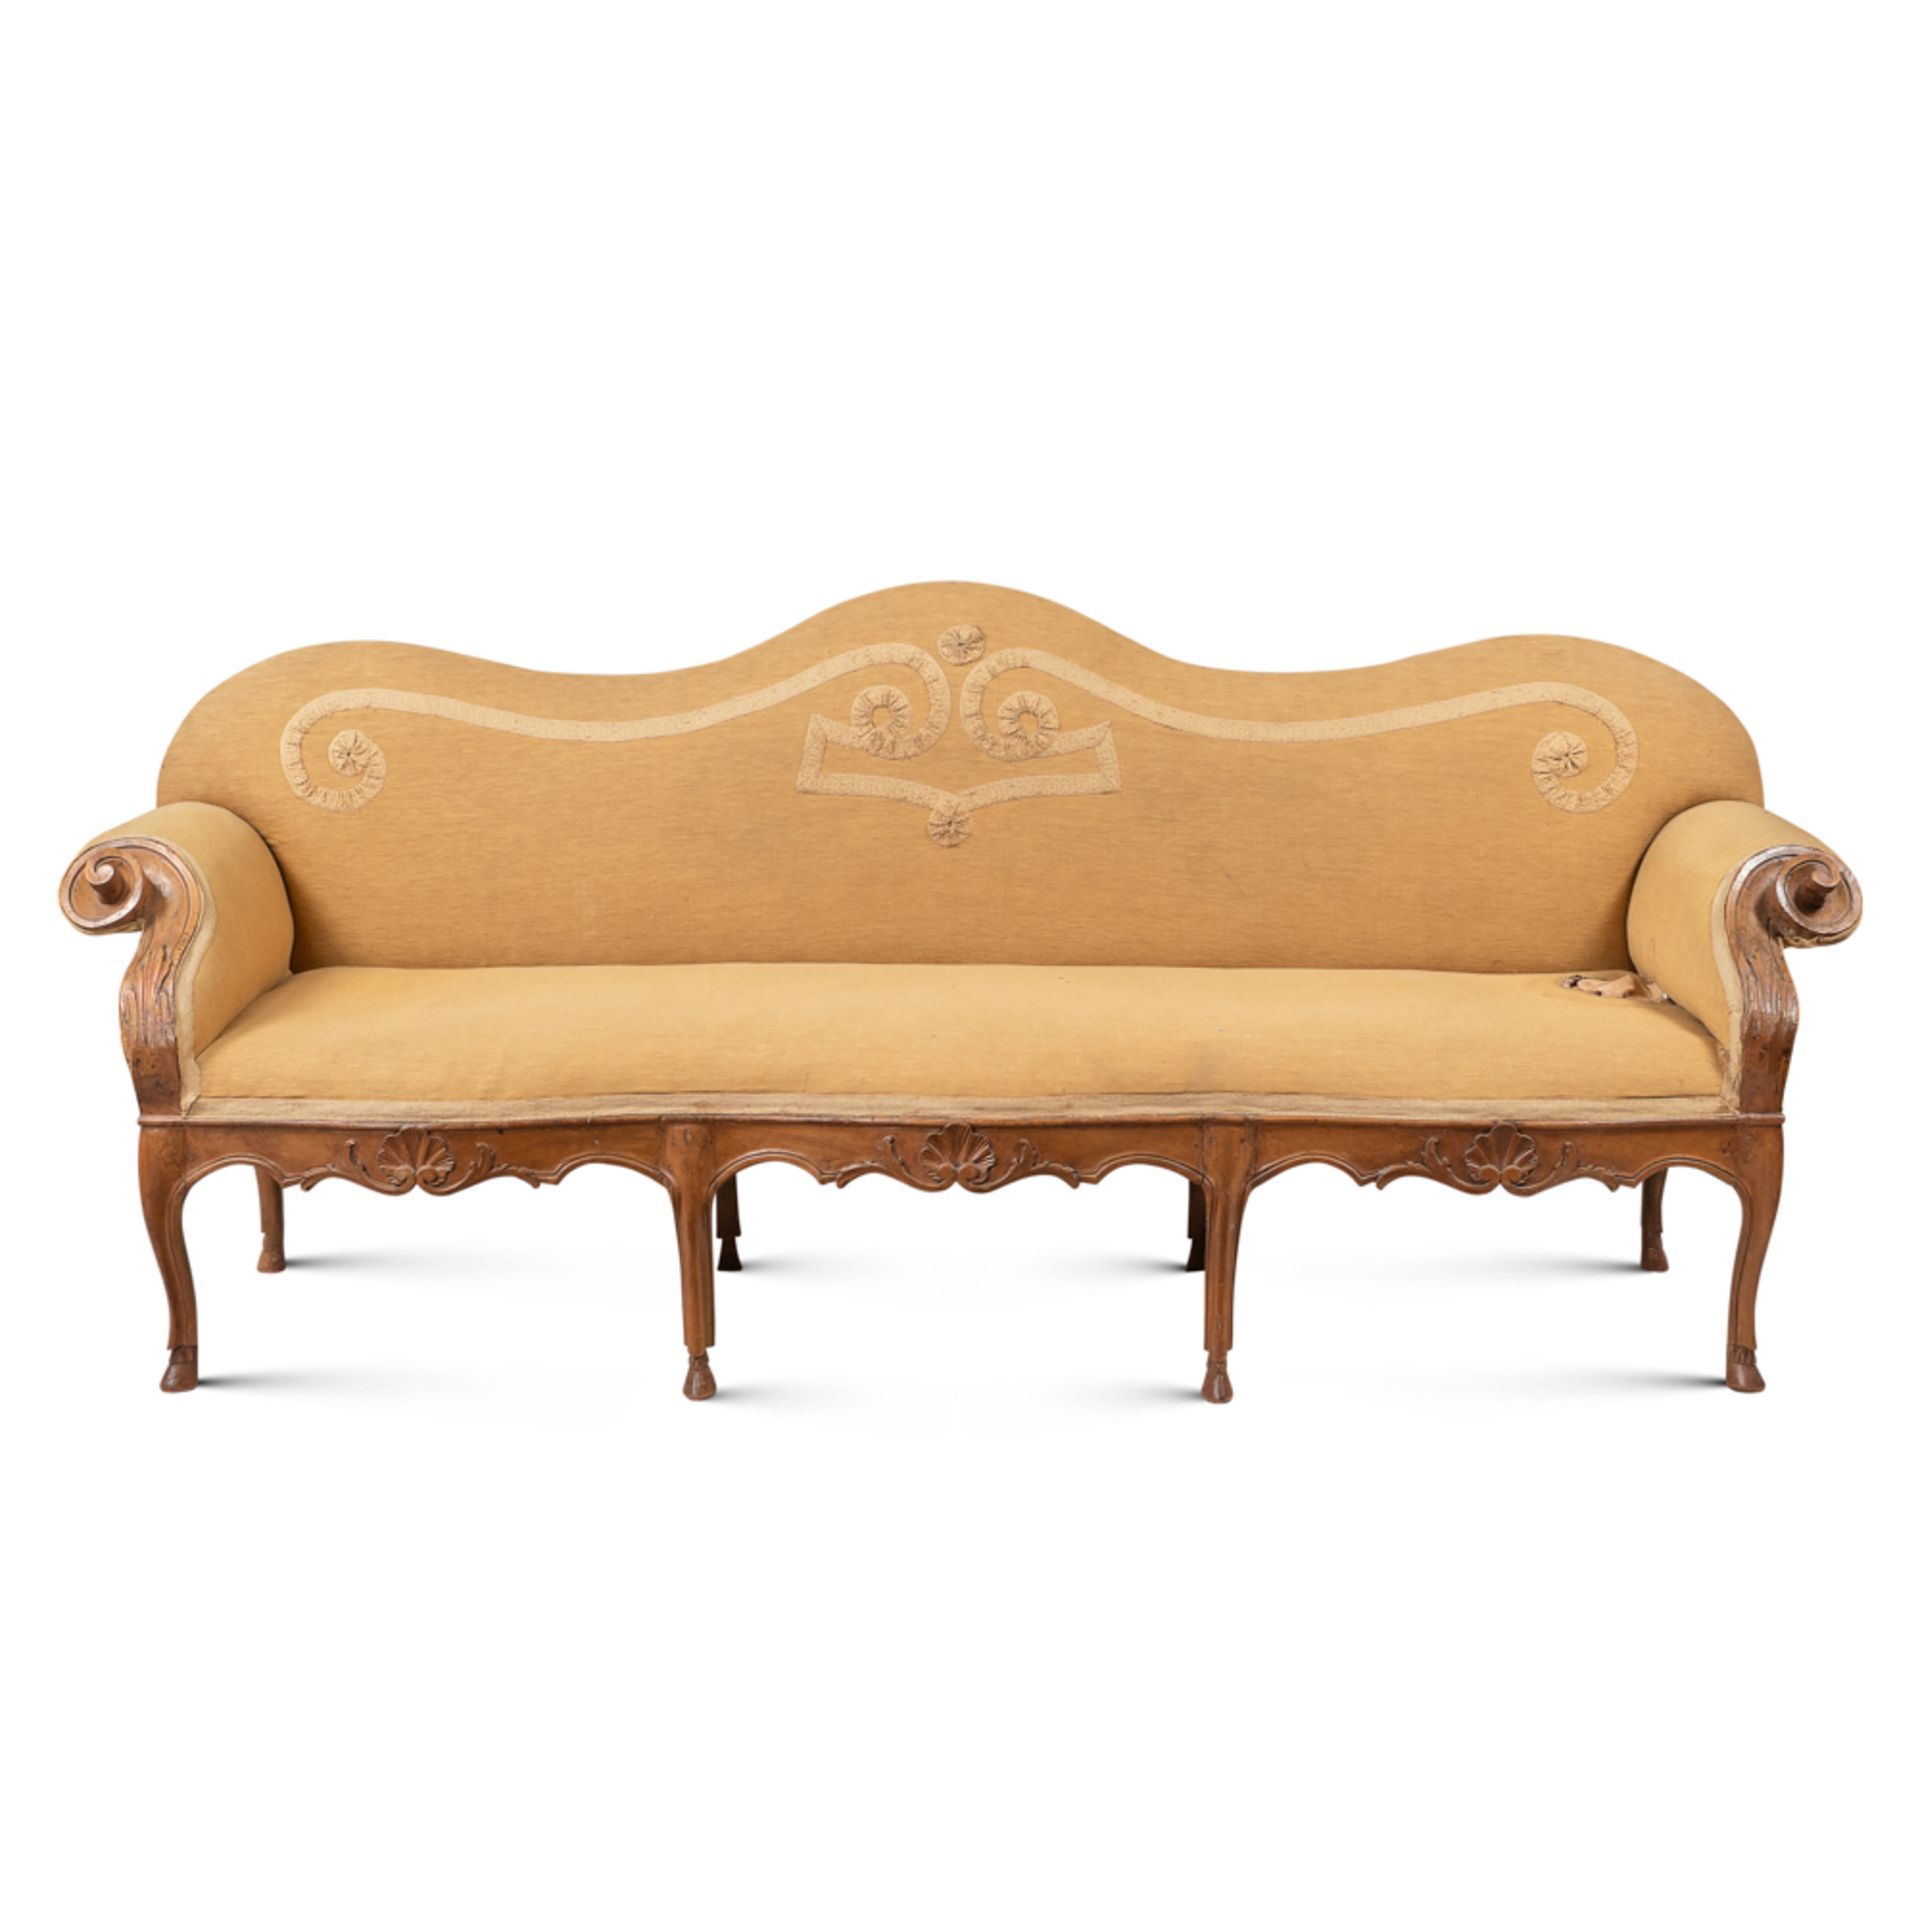 Inlaid walnut sofa Northern Italy, late 18th-19th century 94x226x66 cm.